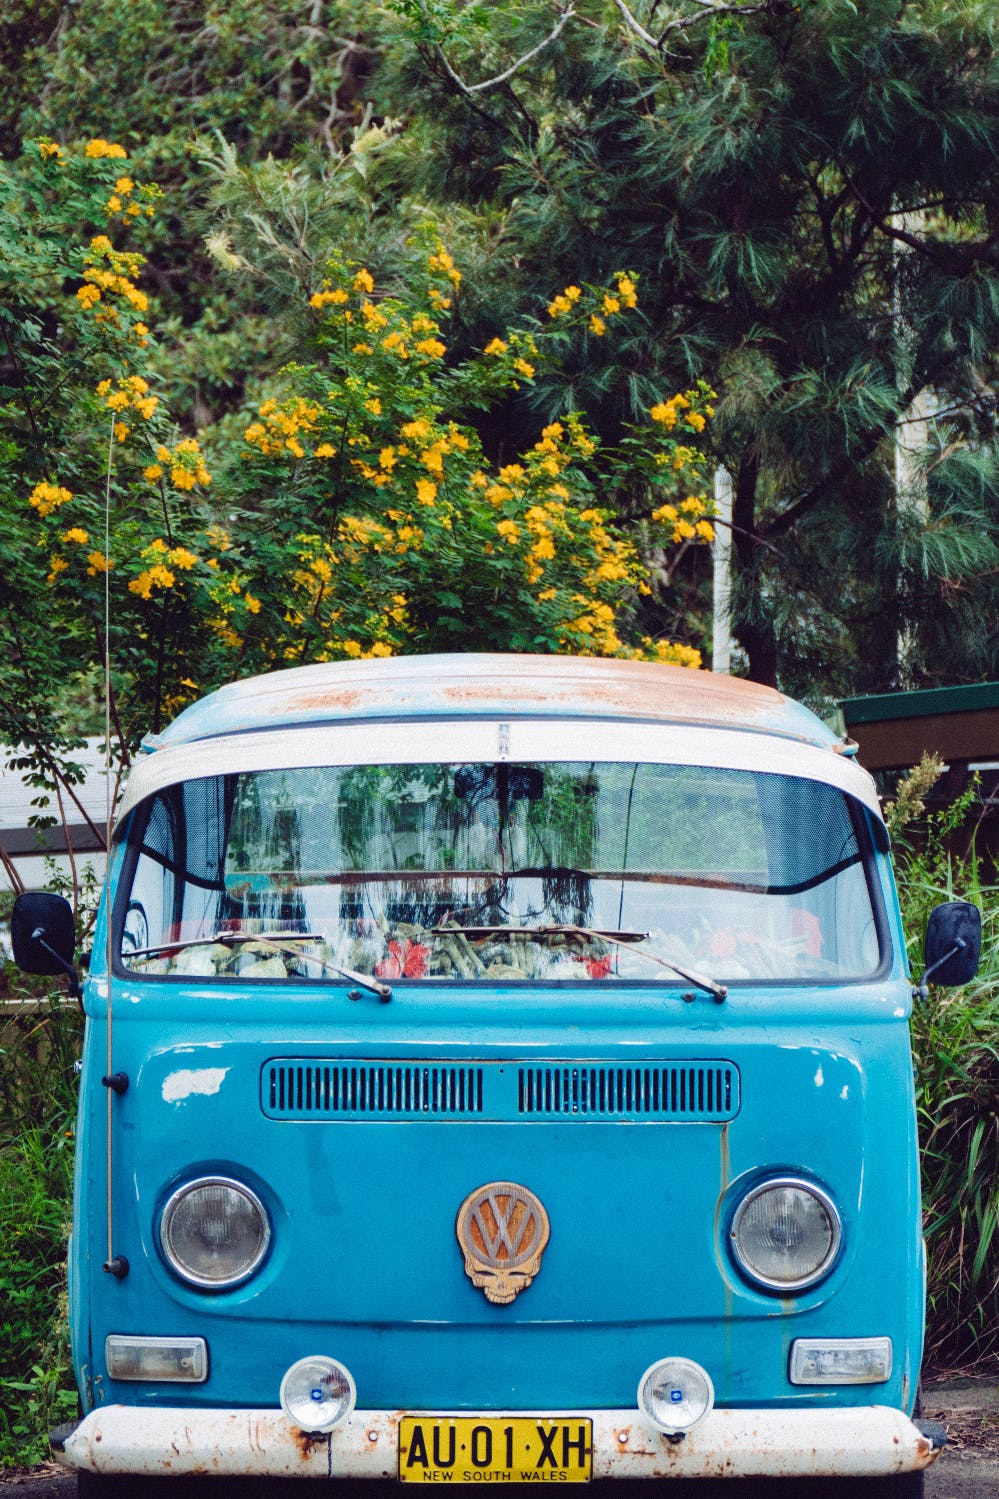 A classic blue VW microbus